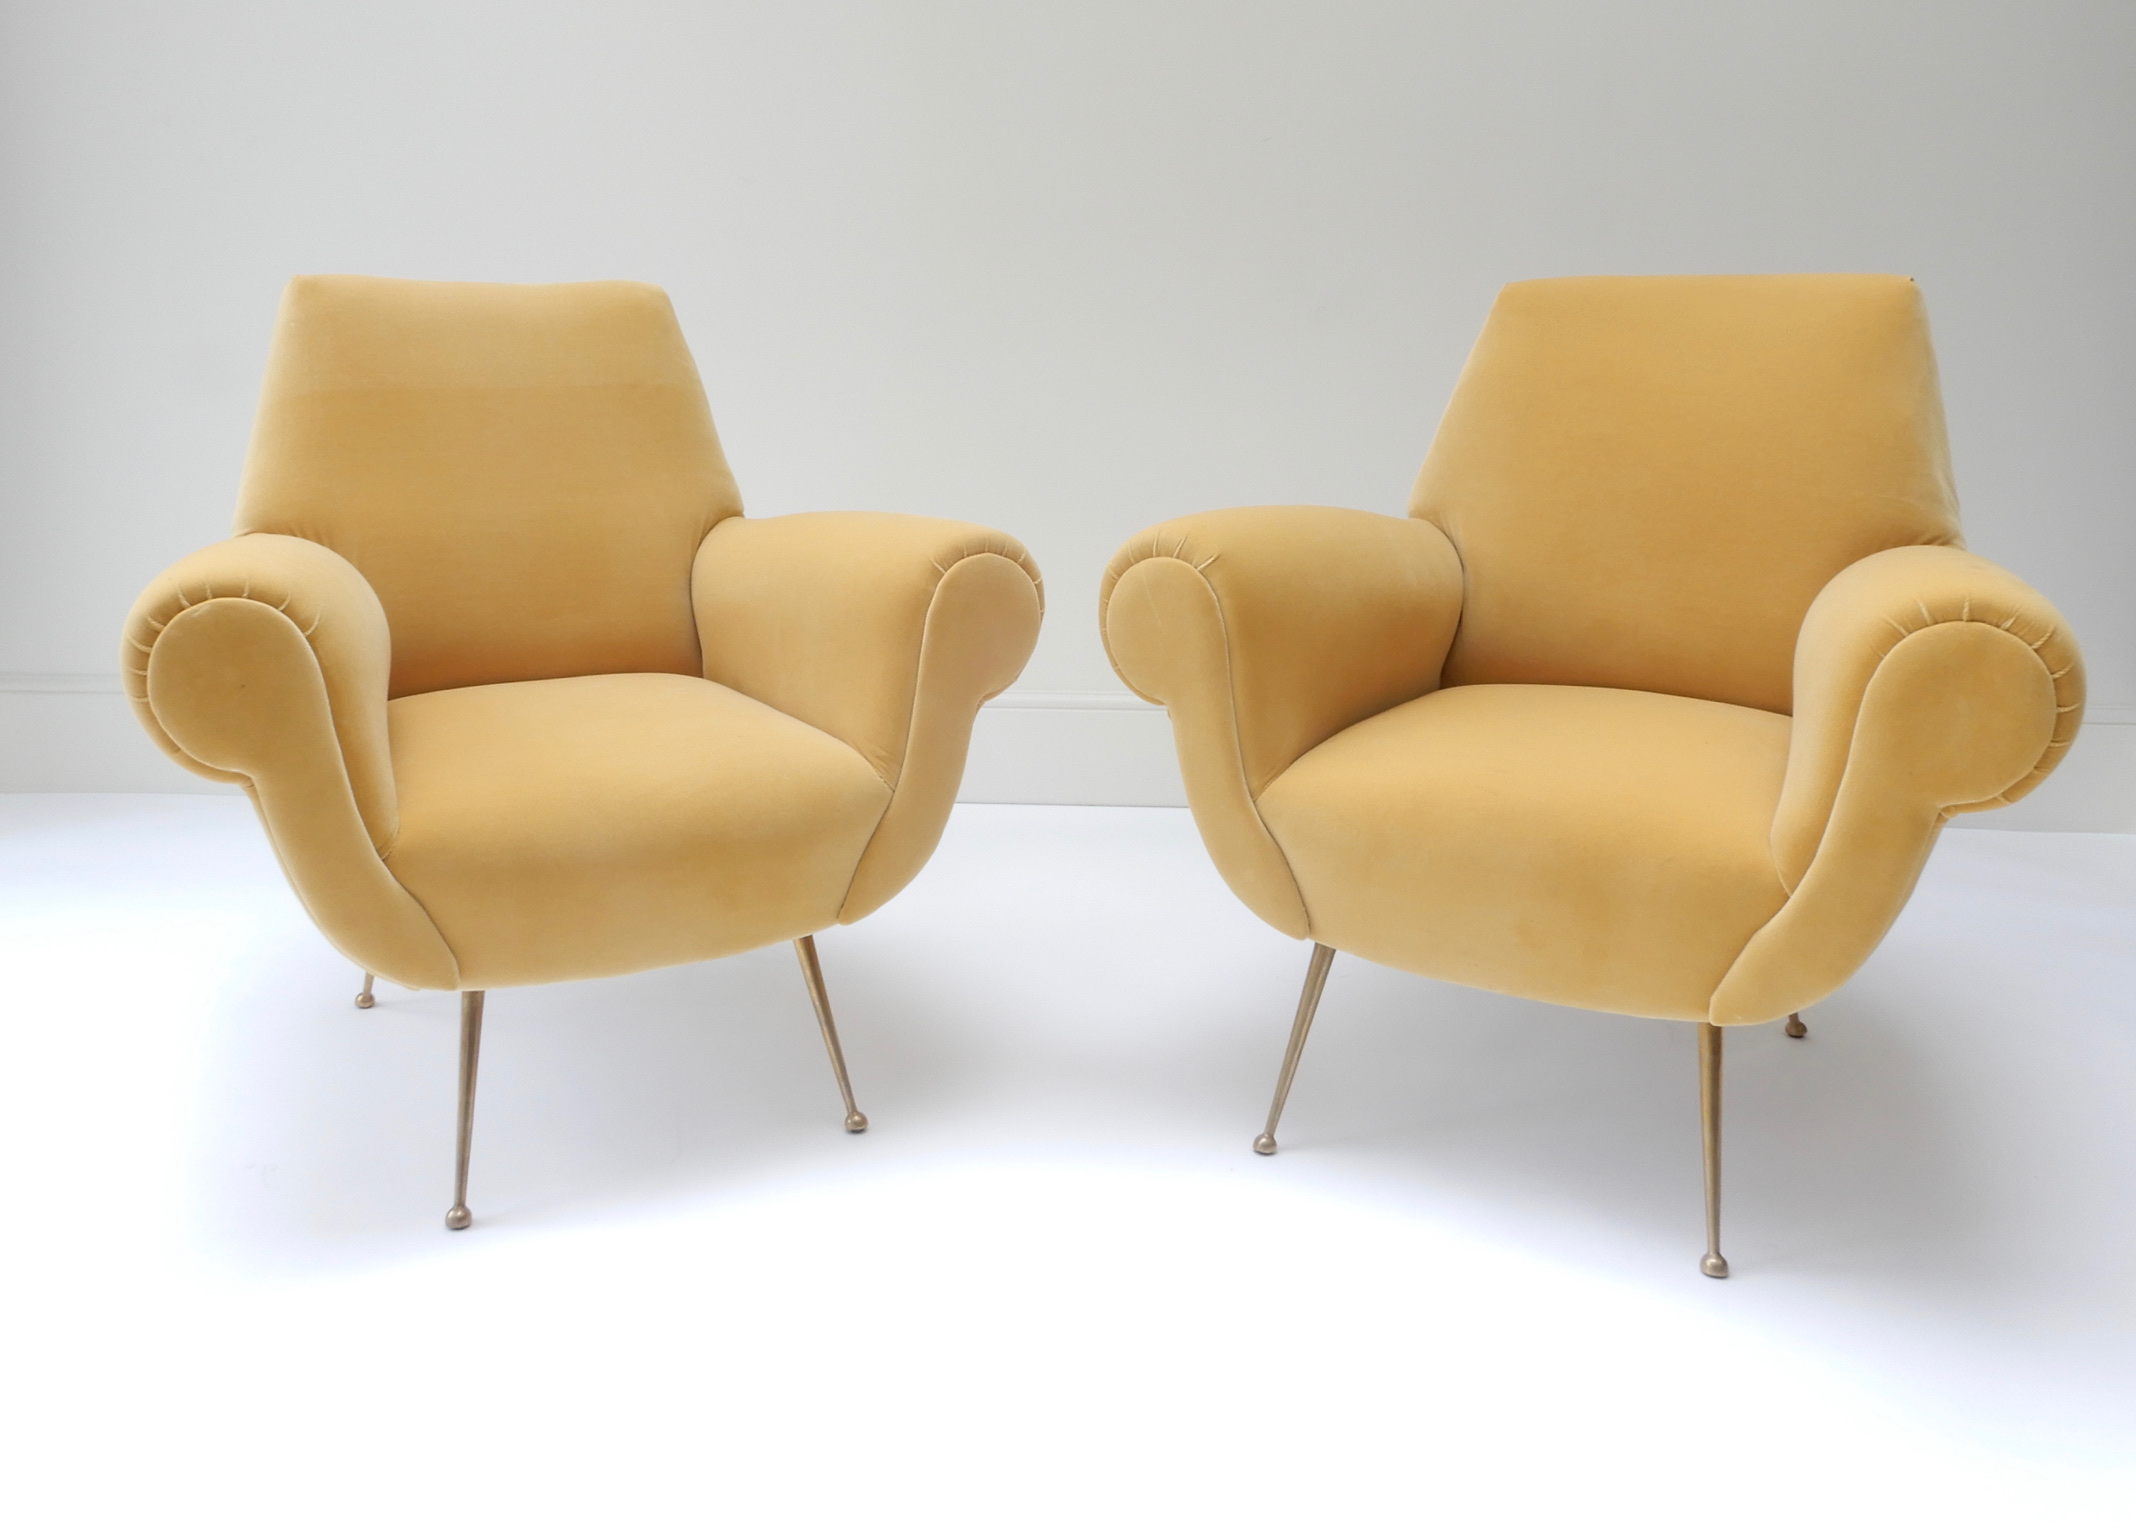 Sold - Pair of Italian Mid Century Modern Style Chairs